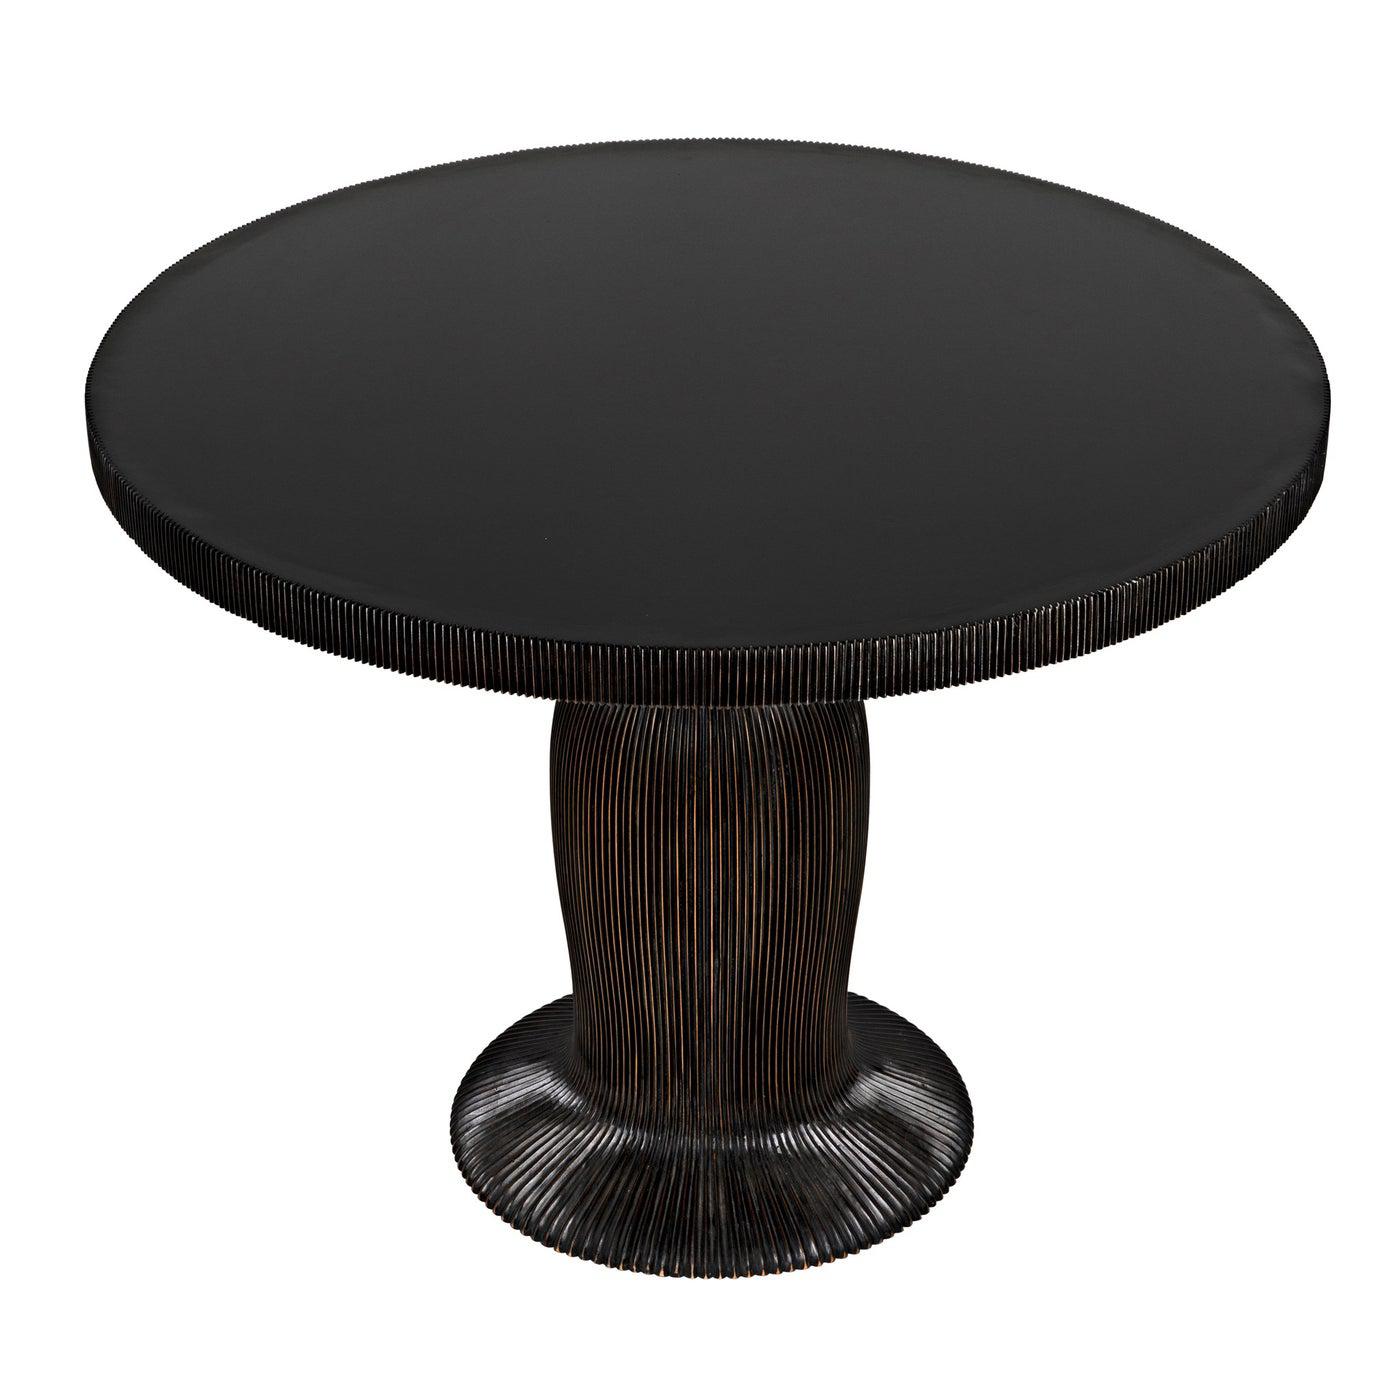 Noir Portobello Dining Table, Hand Rubbed Black with Light Brown Trim-Noir Furniture-Blue Hand Home